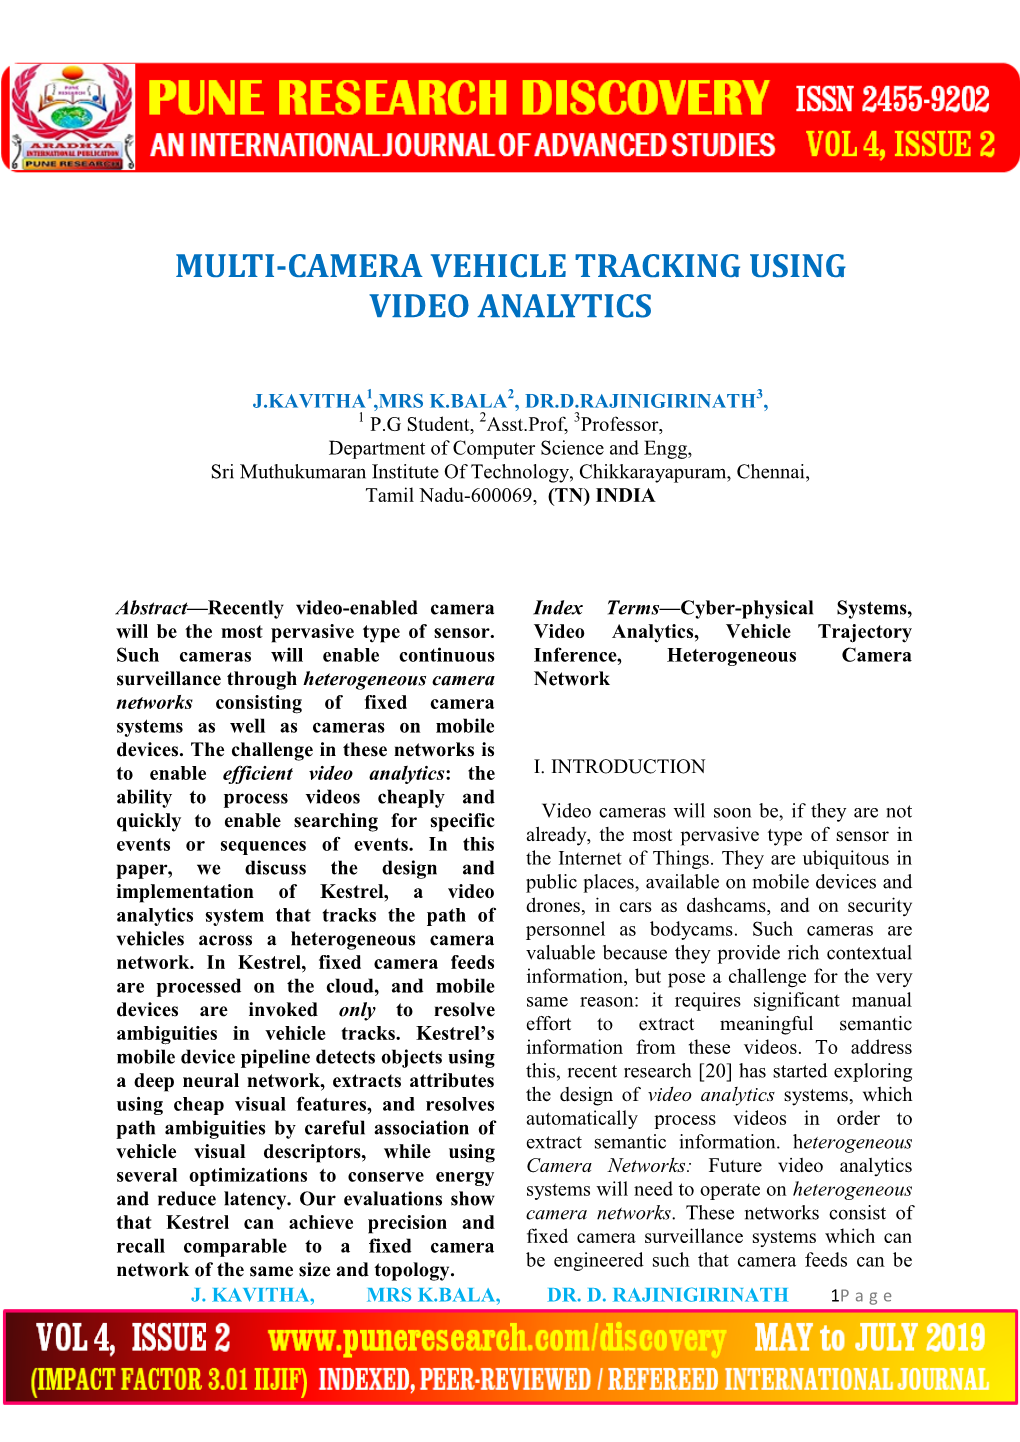 Multi-Camera Vehicle Tracking Using Video Analytics